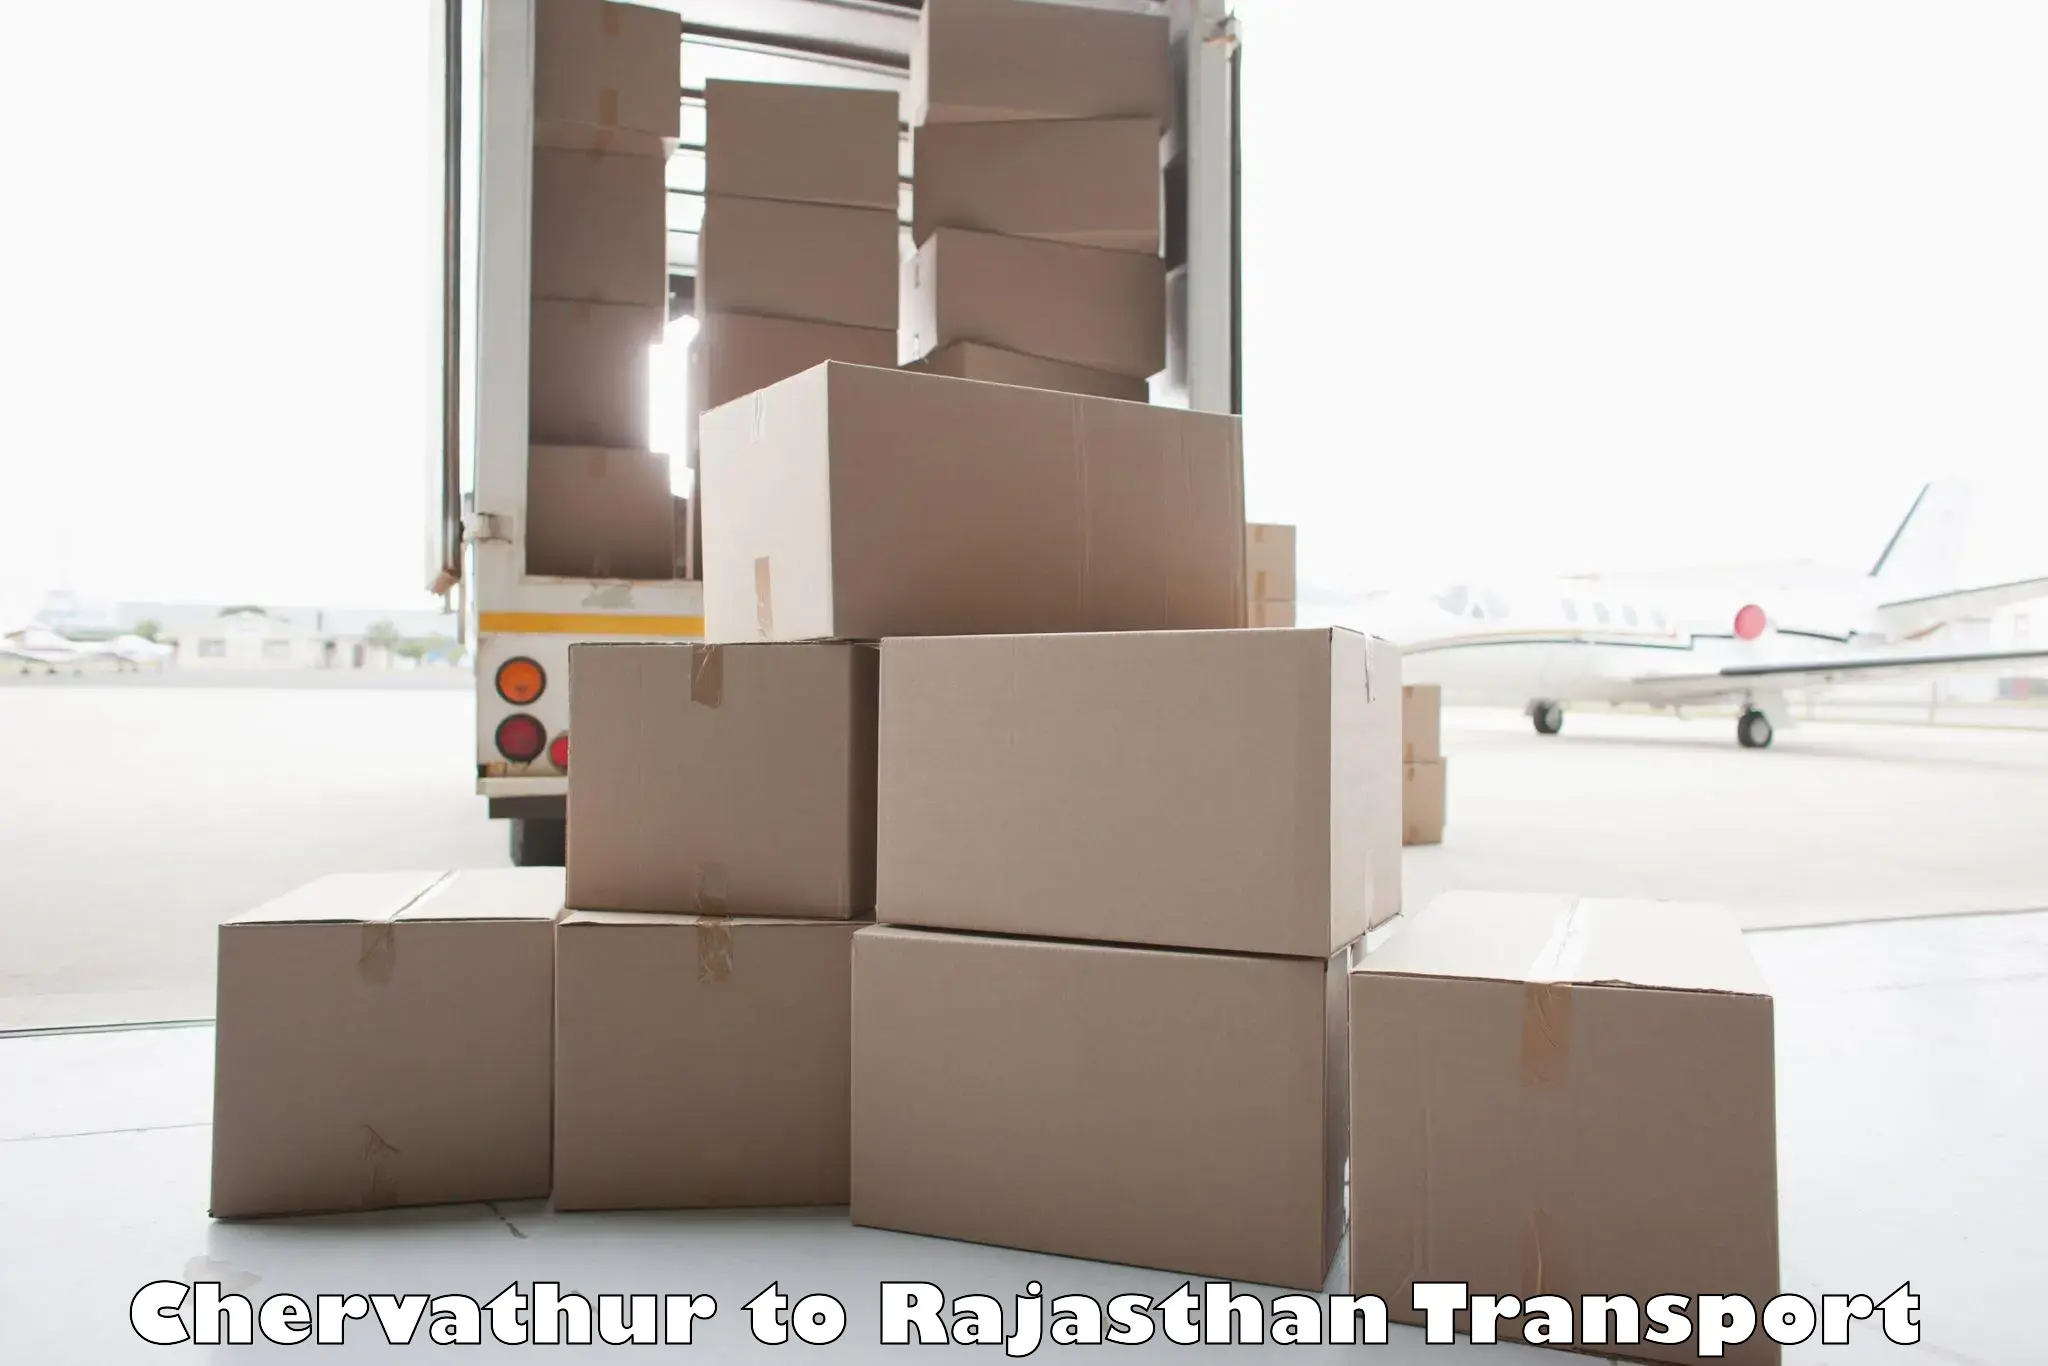 Two wheeler parcel service Chervathur to Rajgarh Rajasthan